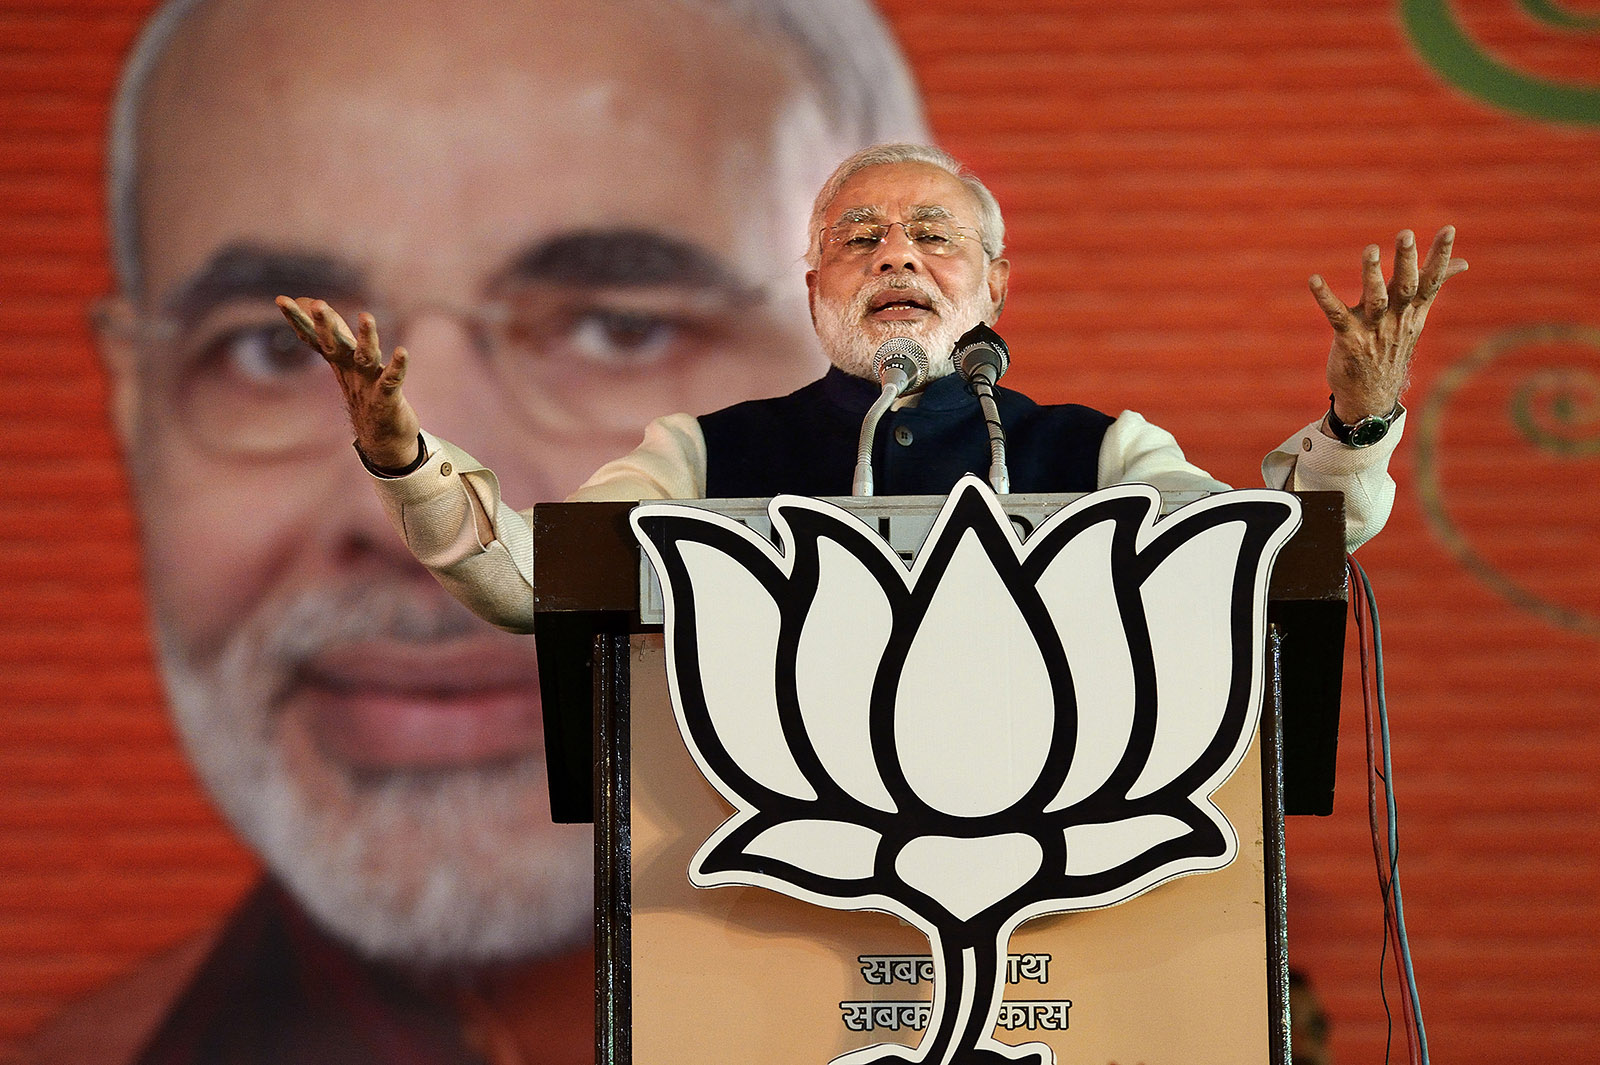 Absent Opposition, Modi’s Hindu Nation